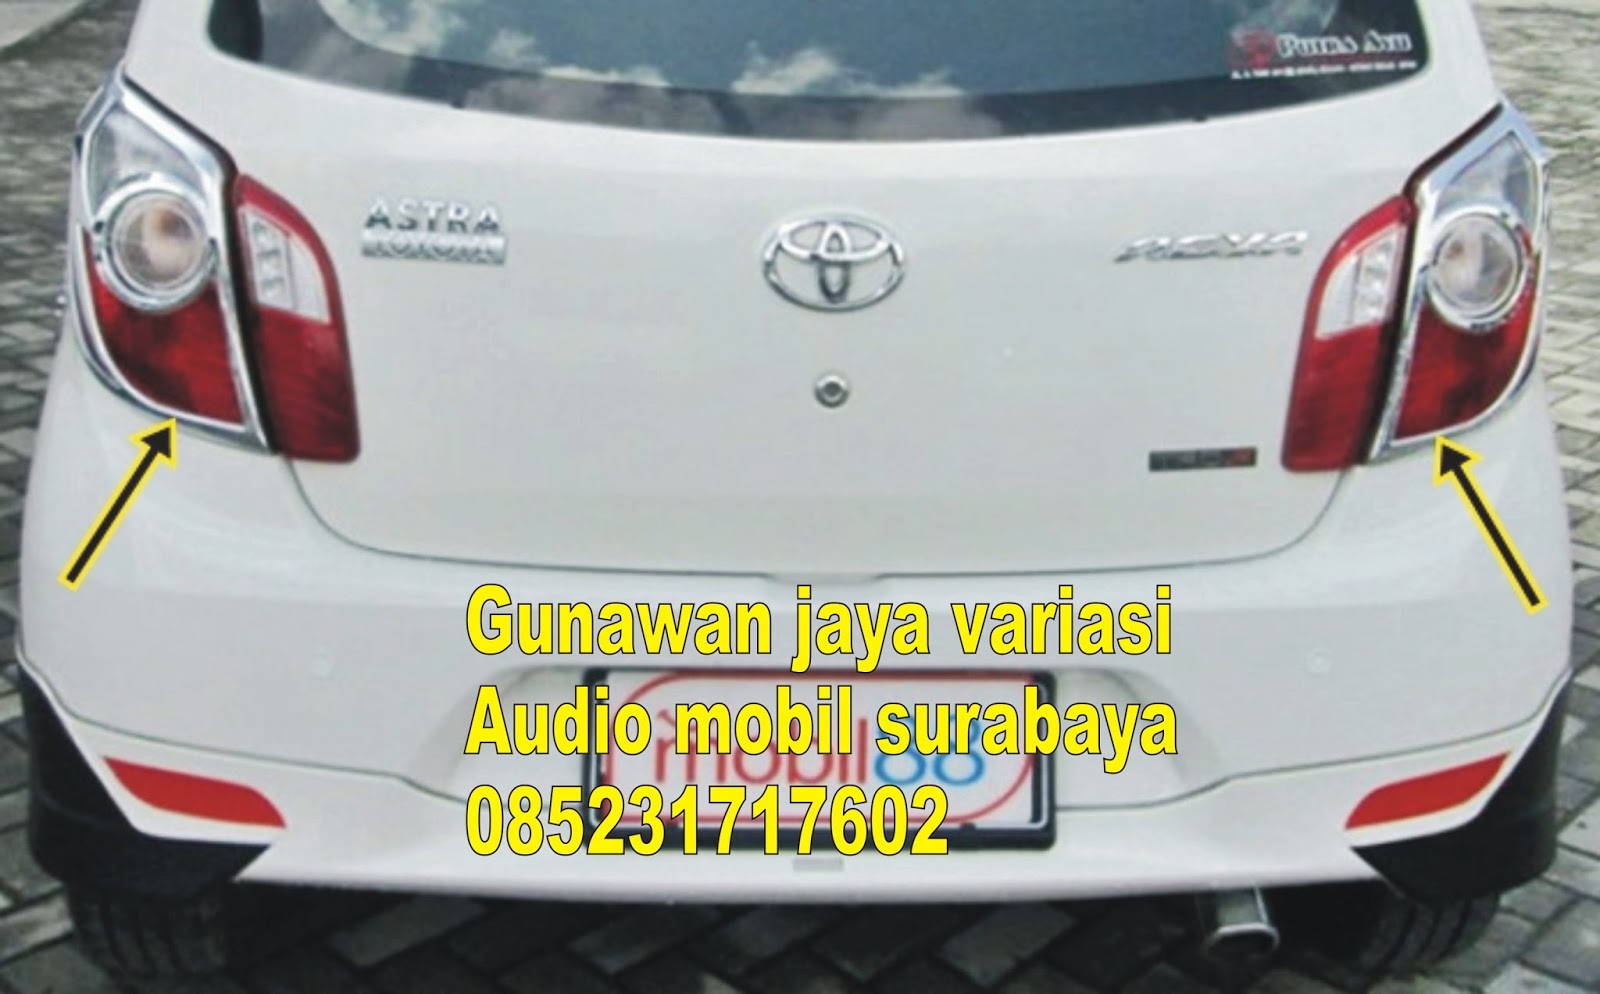 Audio Mobil Surabaya Variasi Mobil Ayla 085231717602